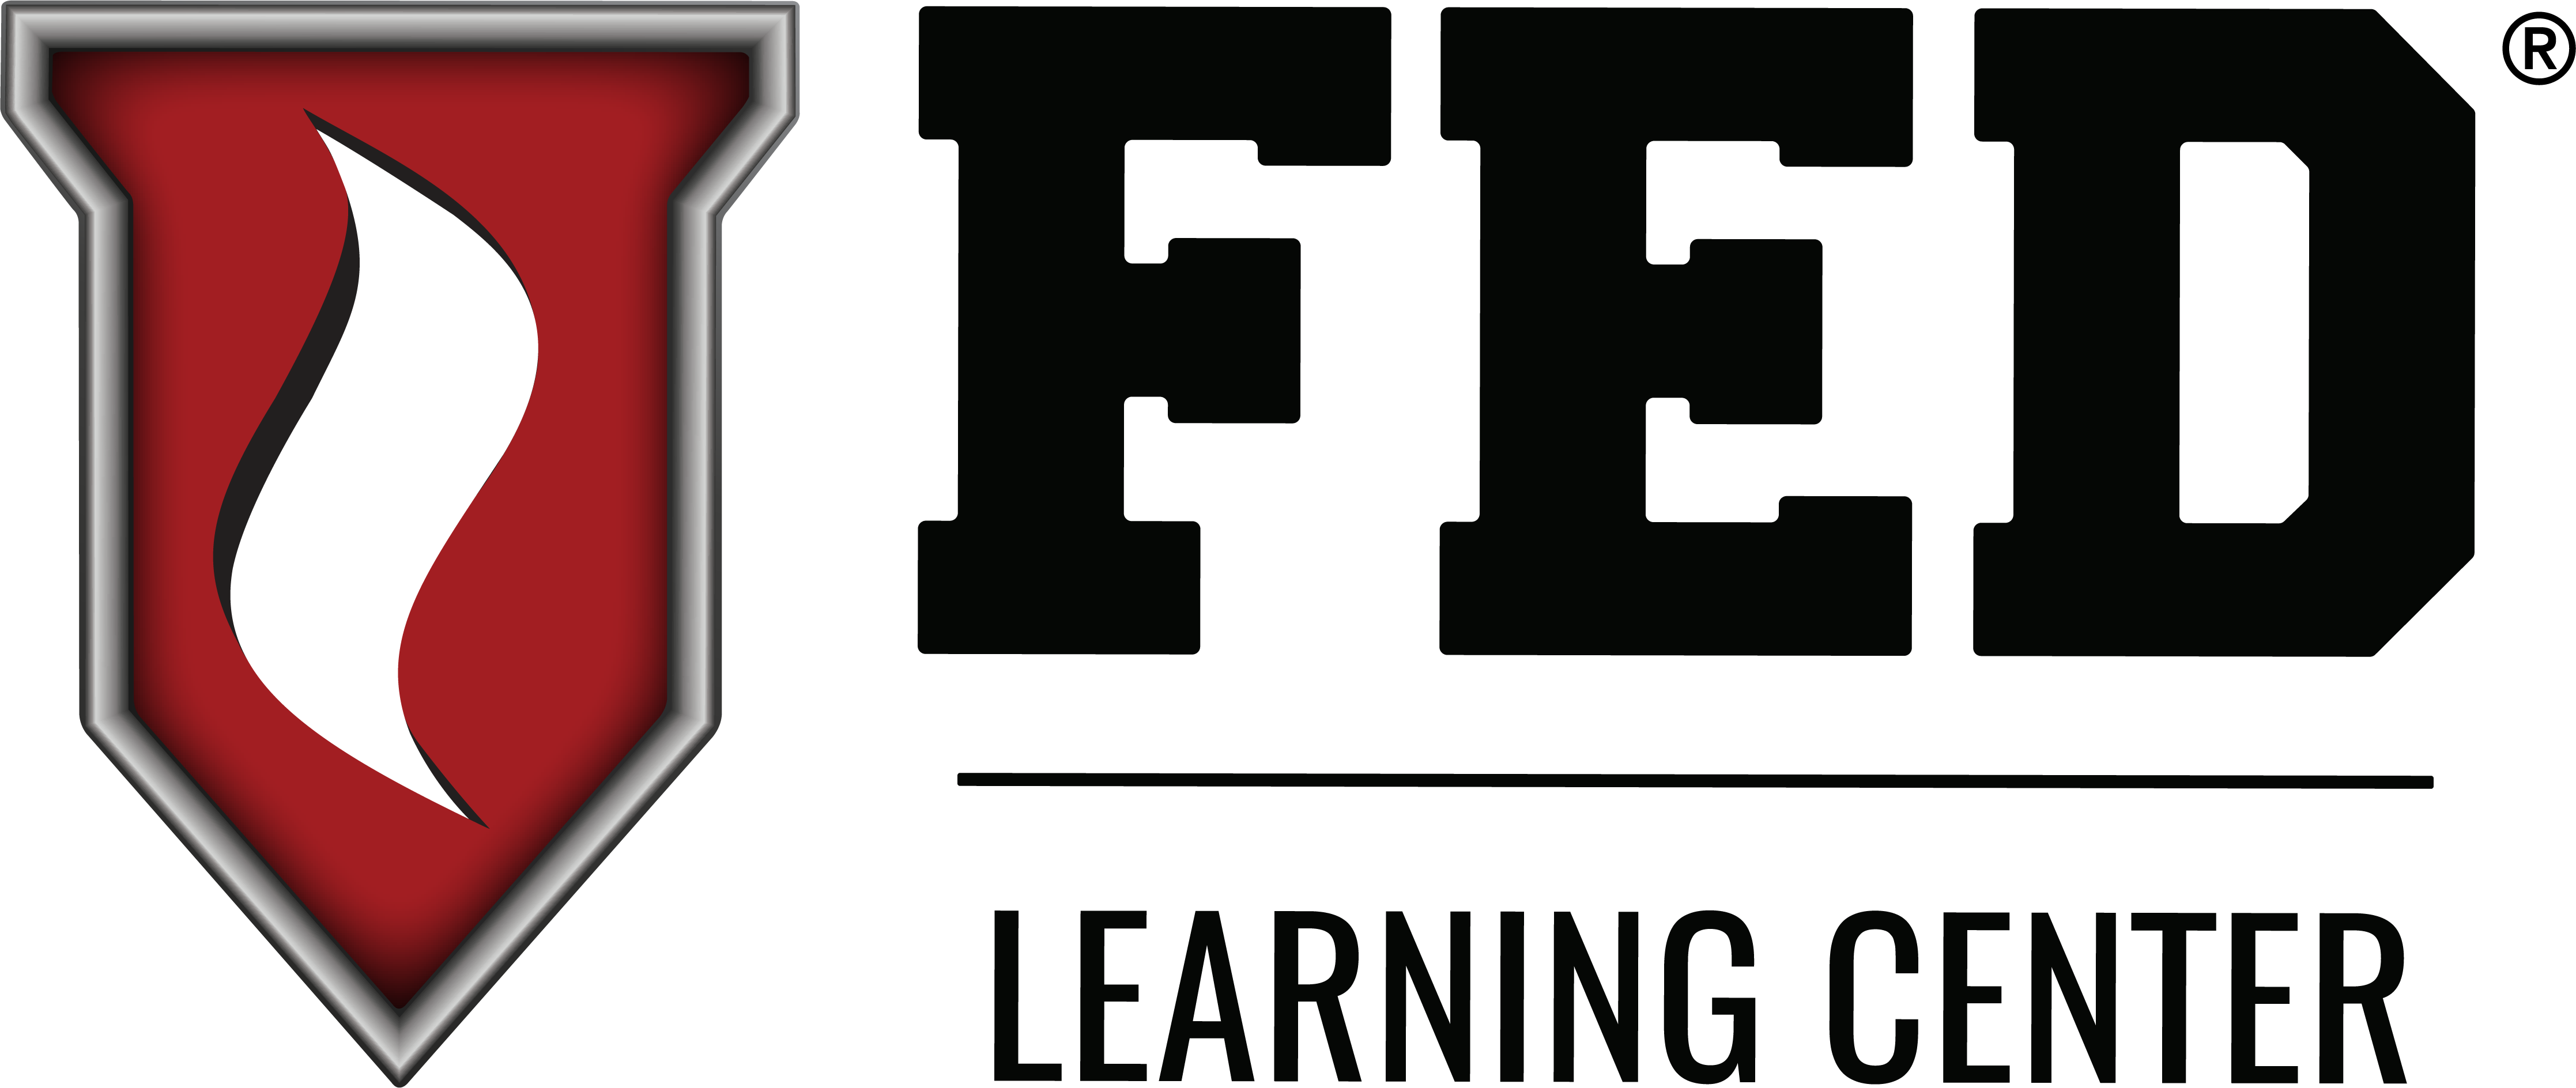 FED Learning Center